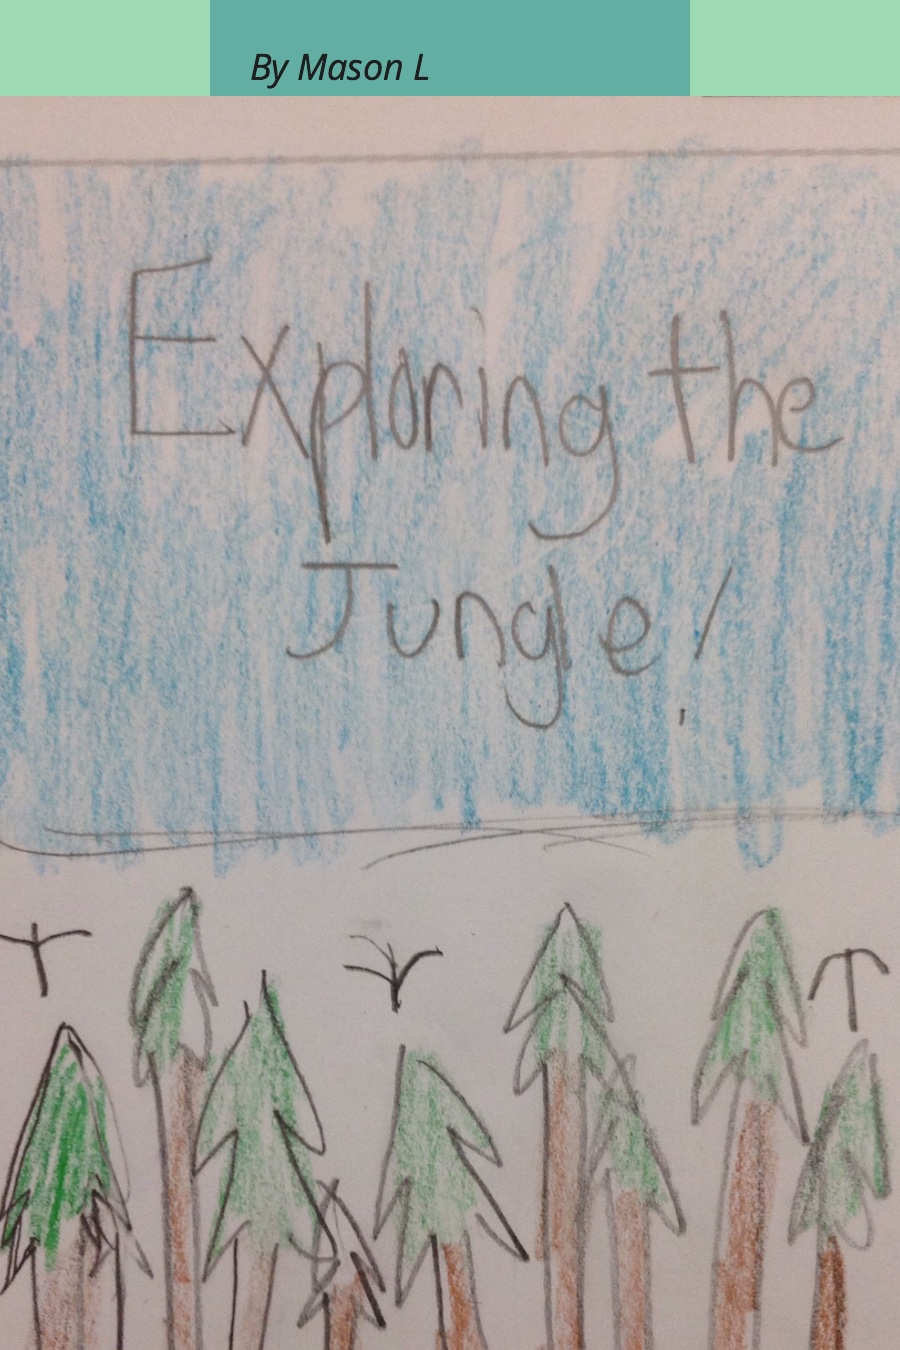 Exploring the Jungle By Mason L